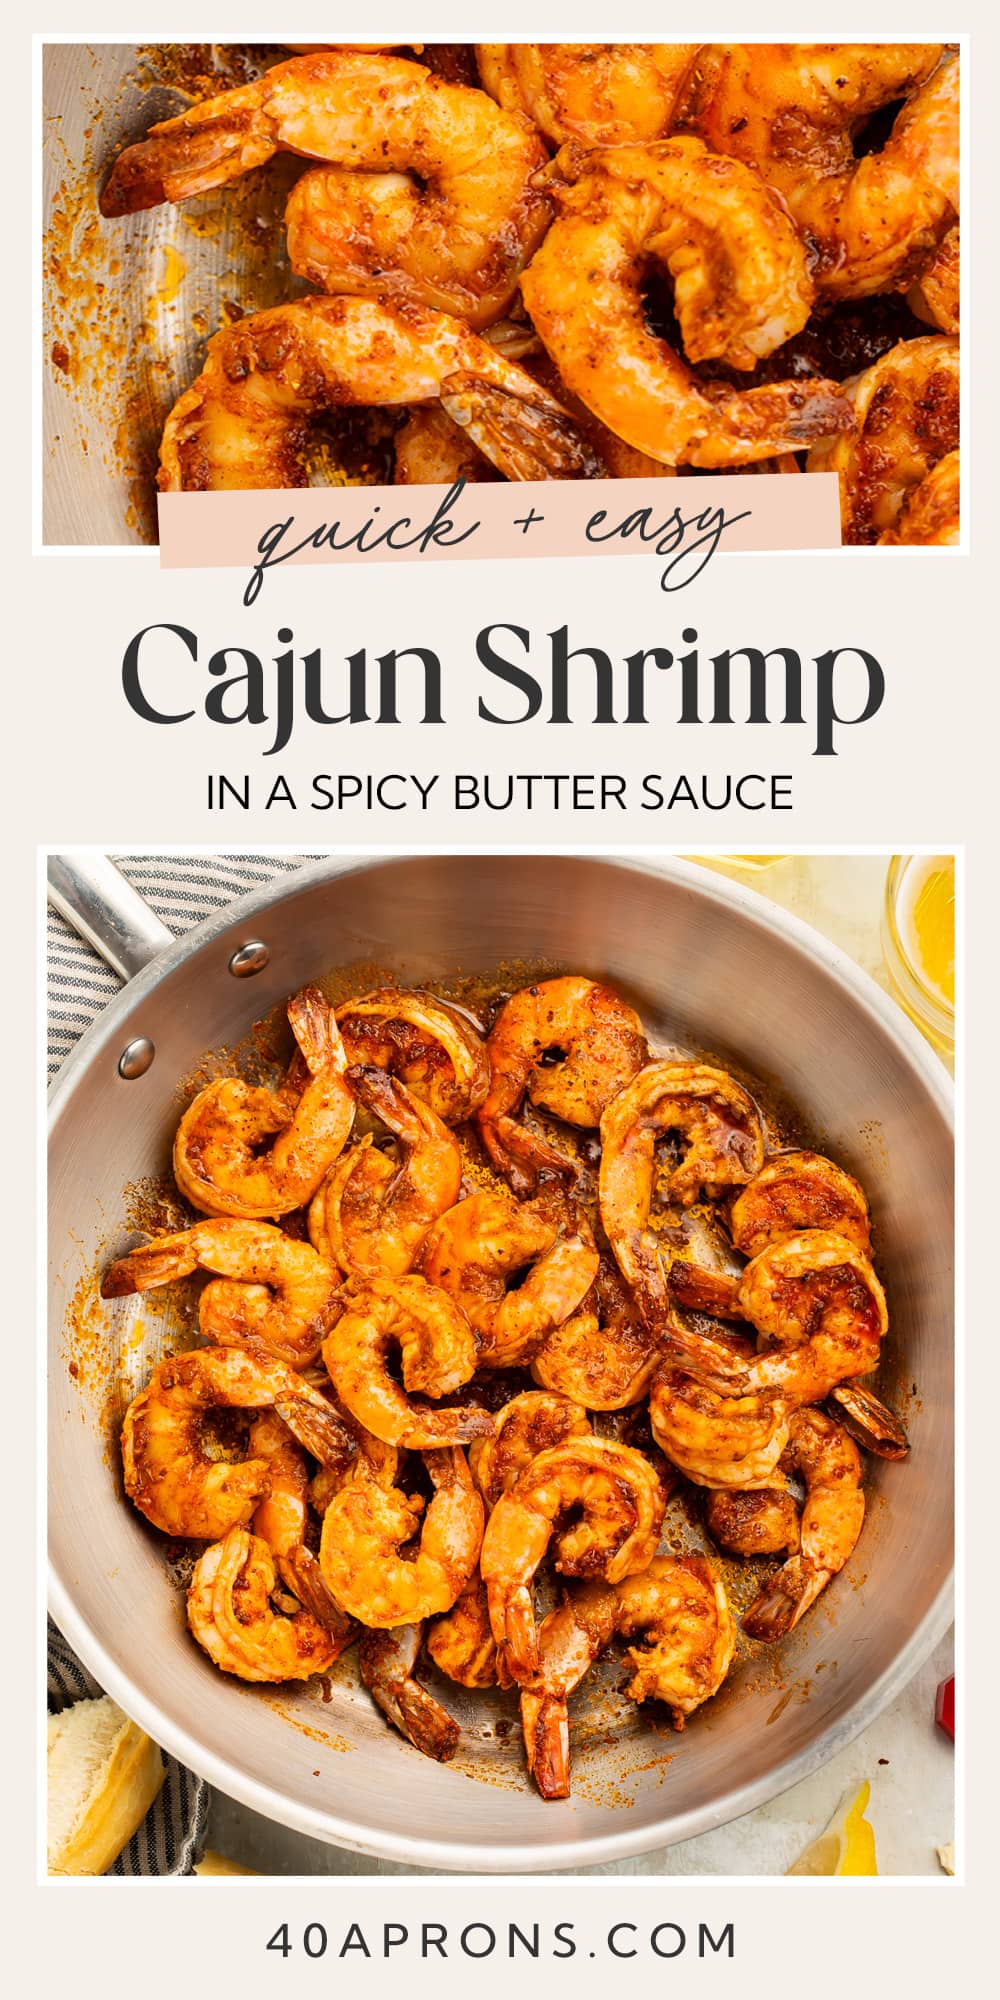 Pin graphic for Cajun shrimp.